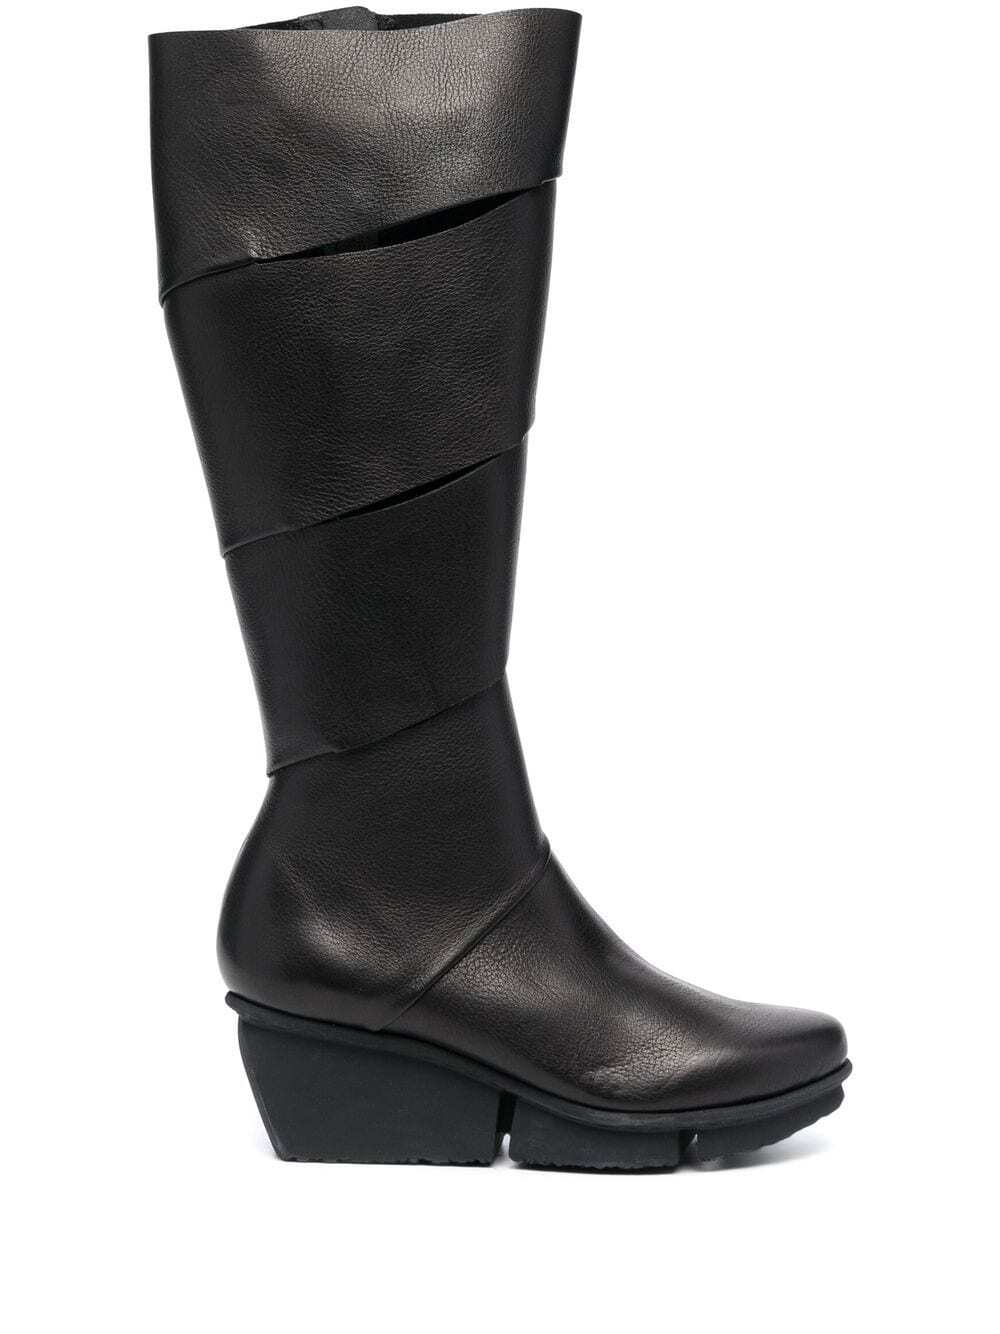 Trippen Curious tall boots - Black